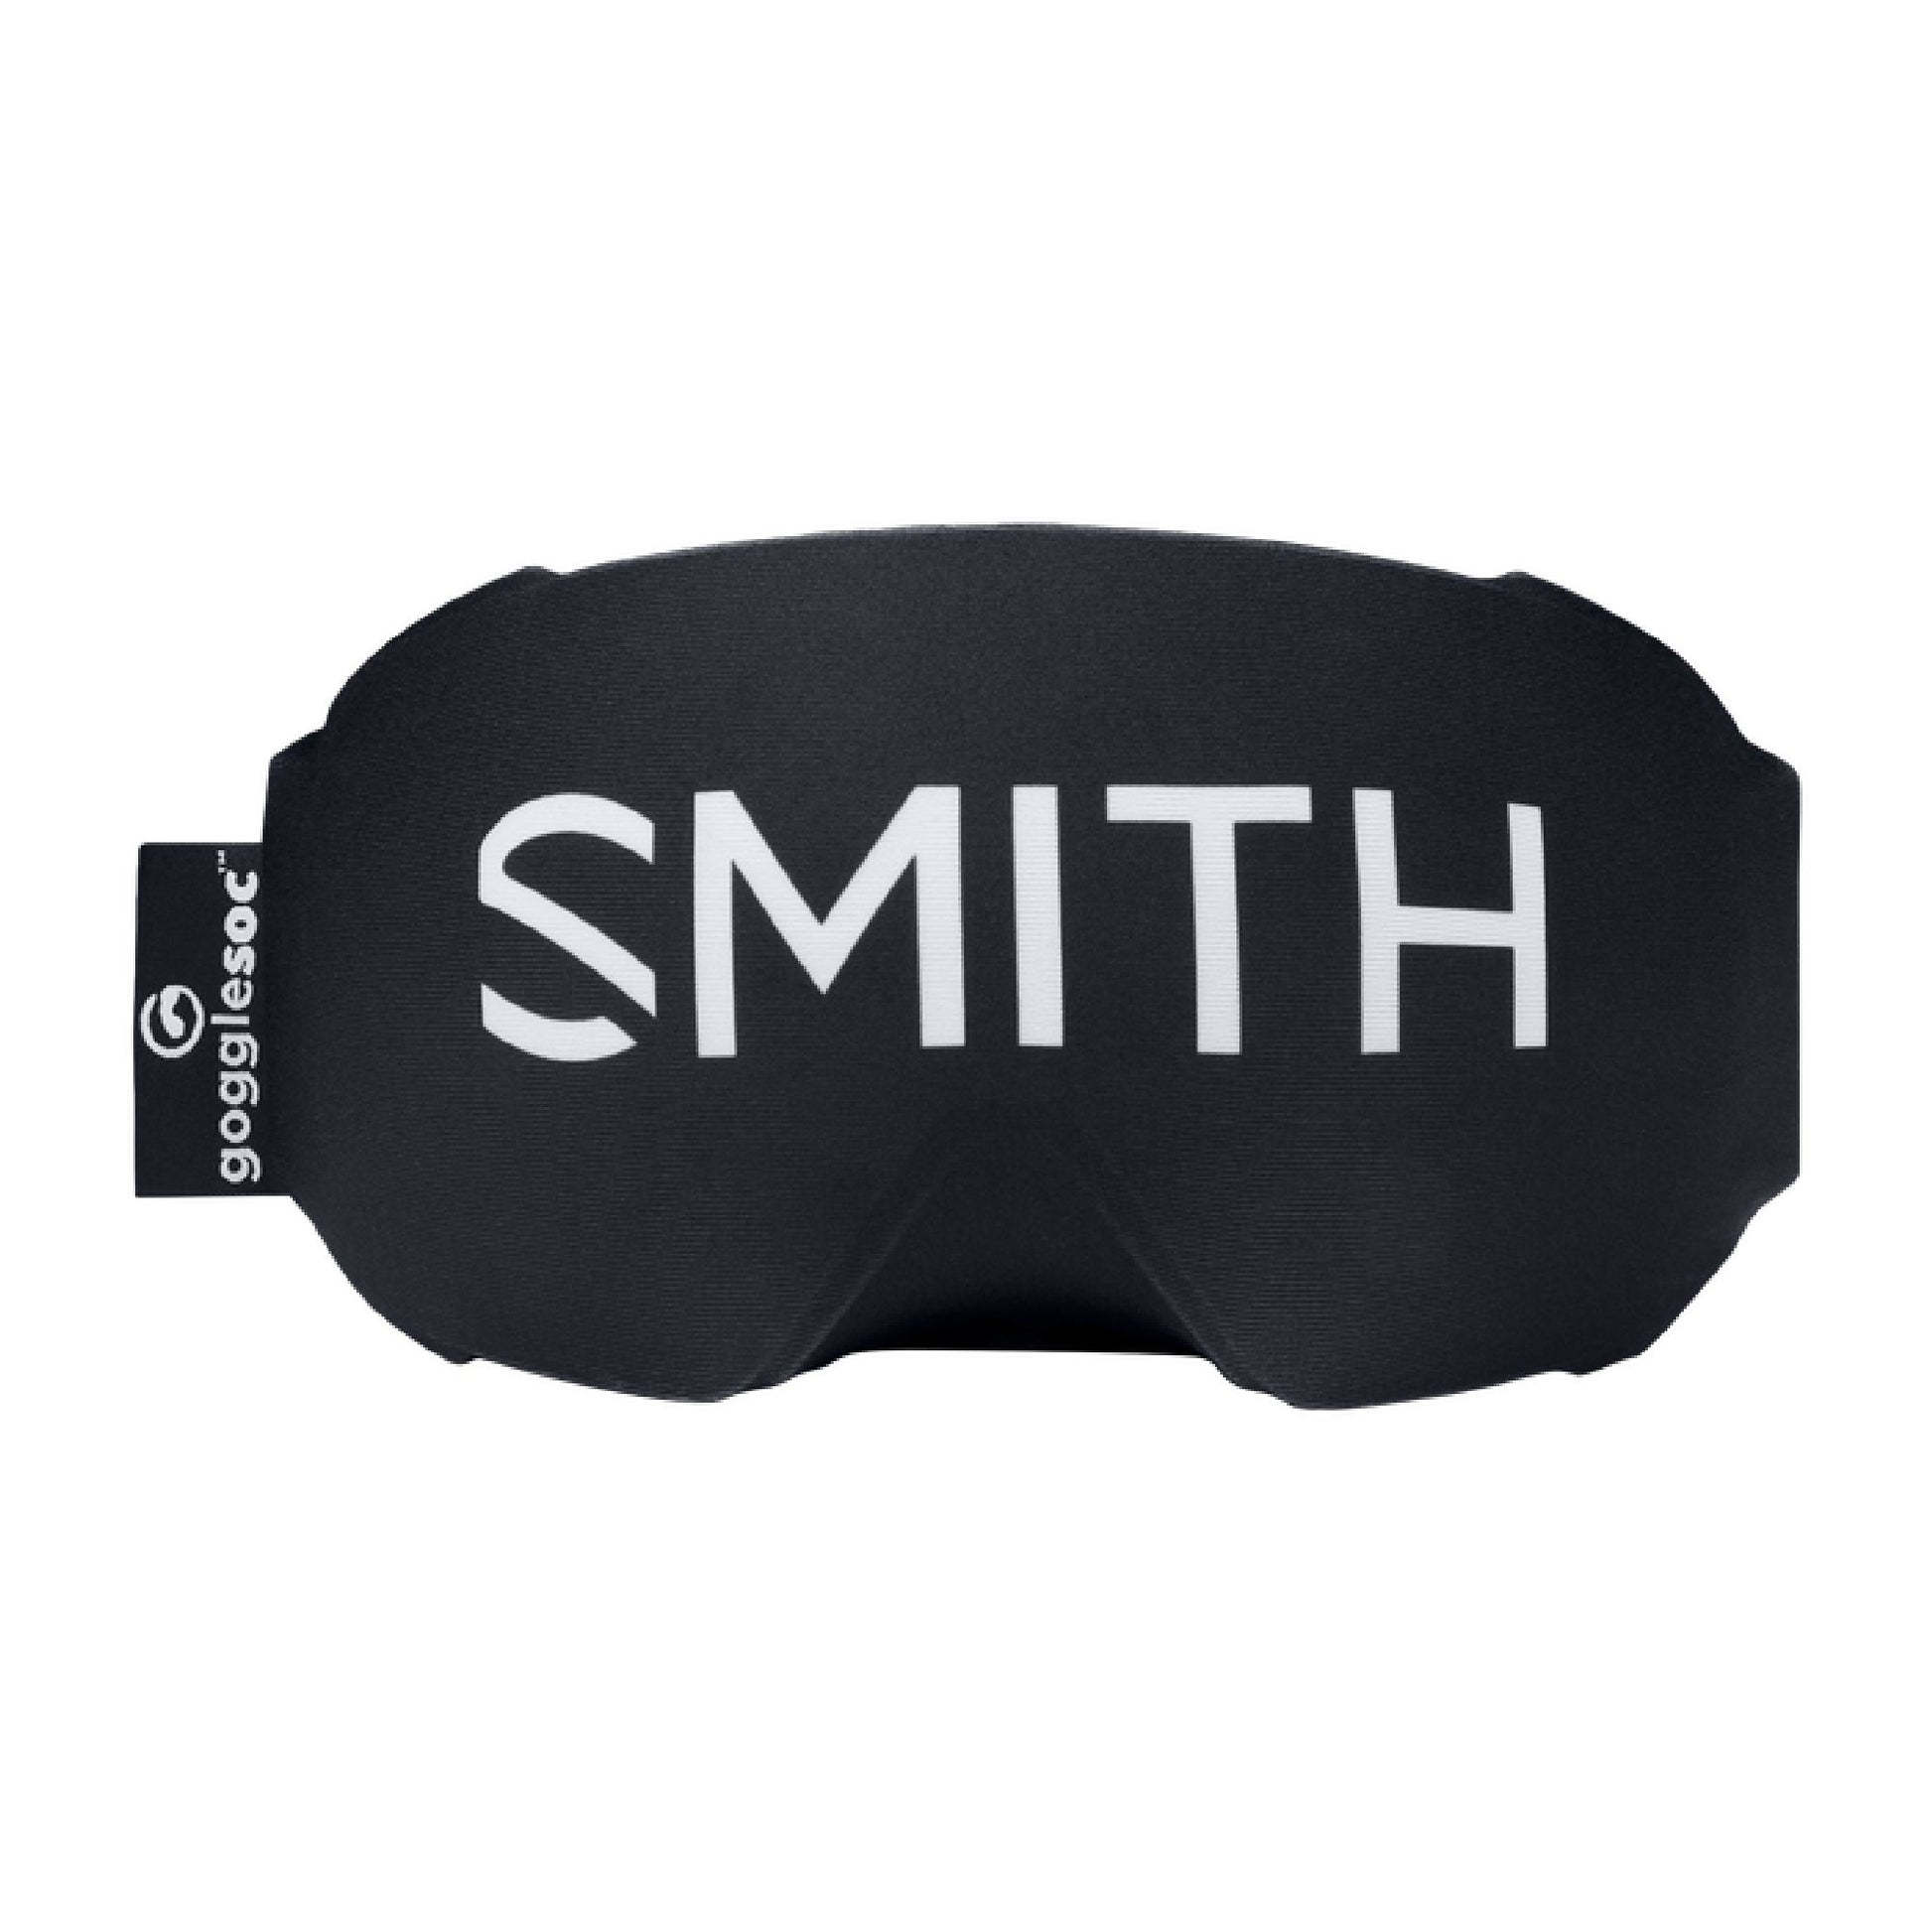 Smith 4D MAG Snow Goggle Black / ChromaPop Everyday Red Mirror Snow Goggles